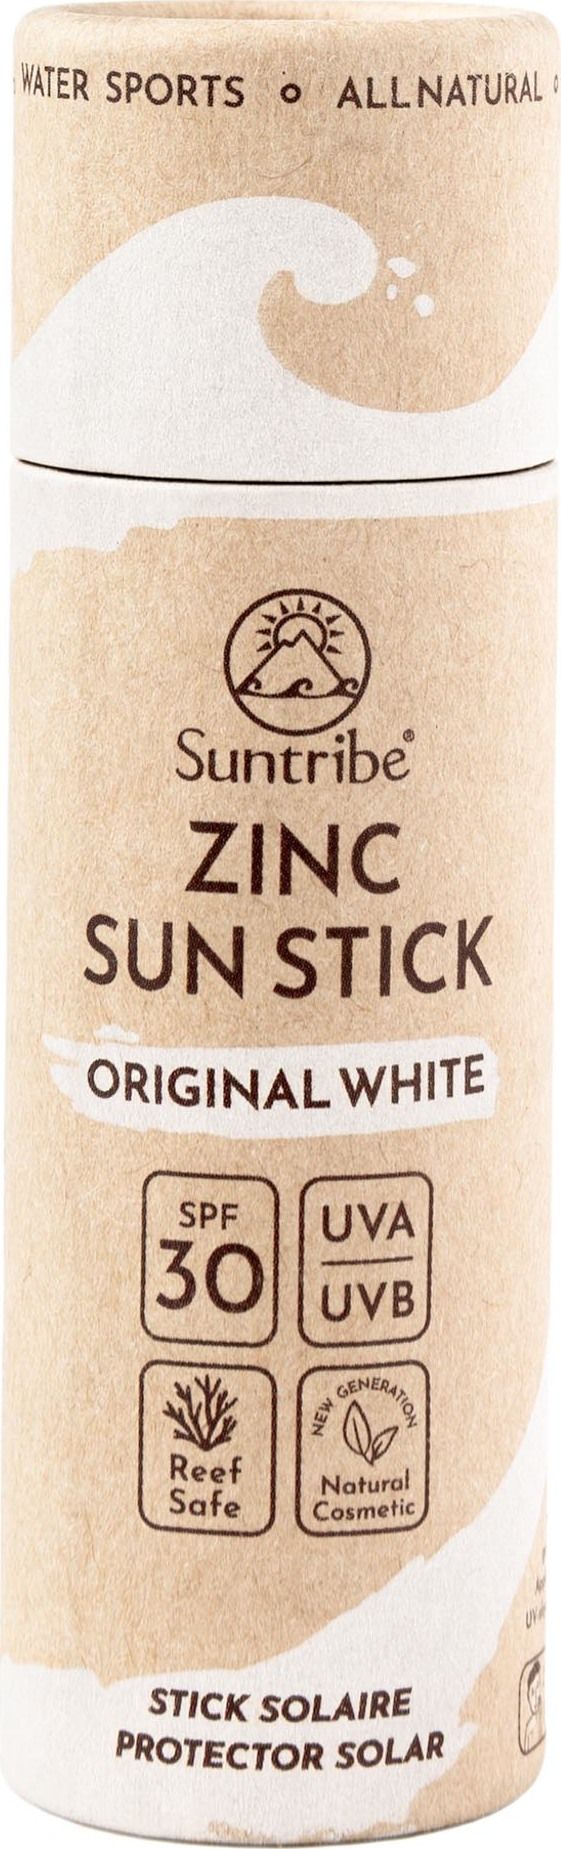 Natural Mineral Zinc Sun Stick SPF 30 White Suntribe